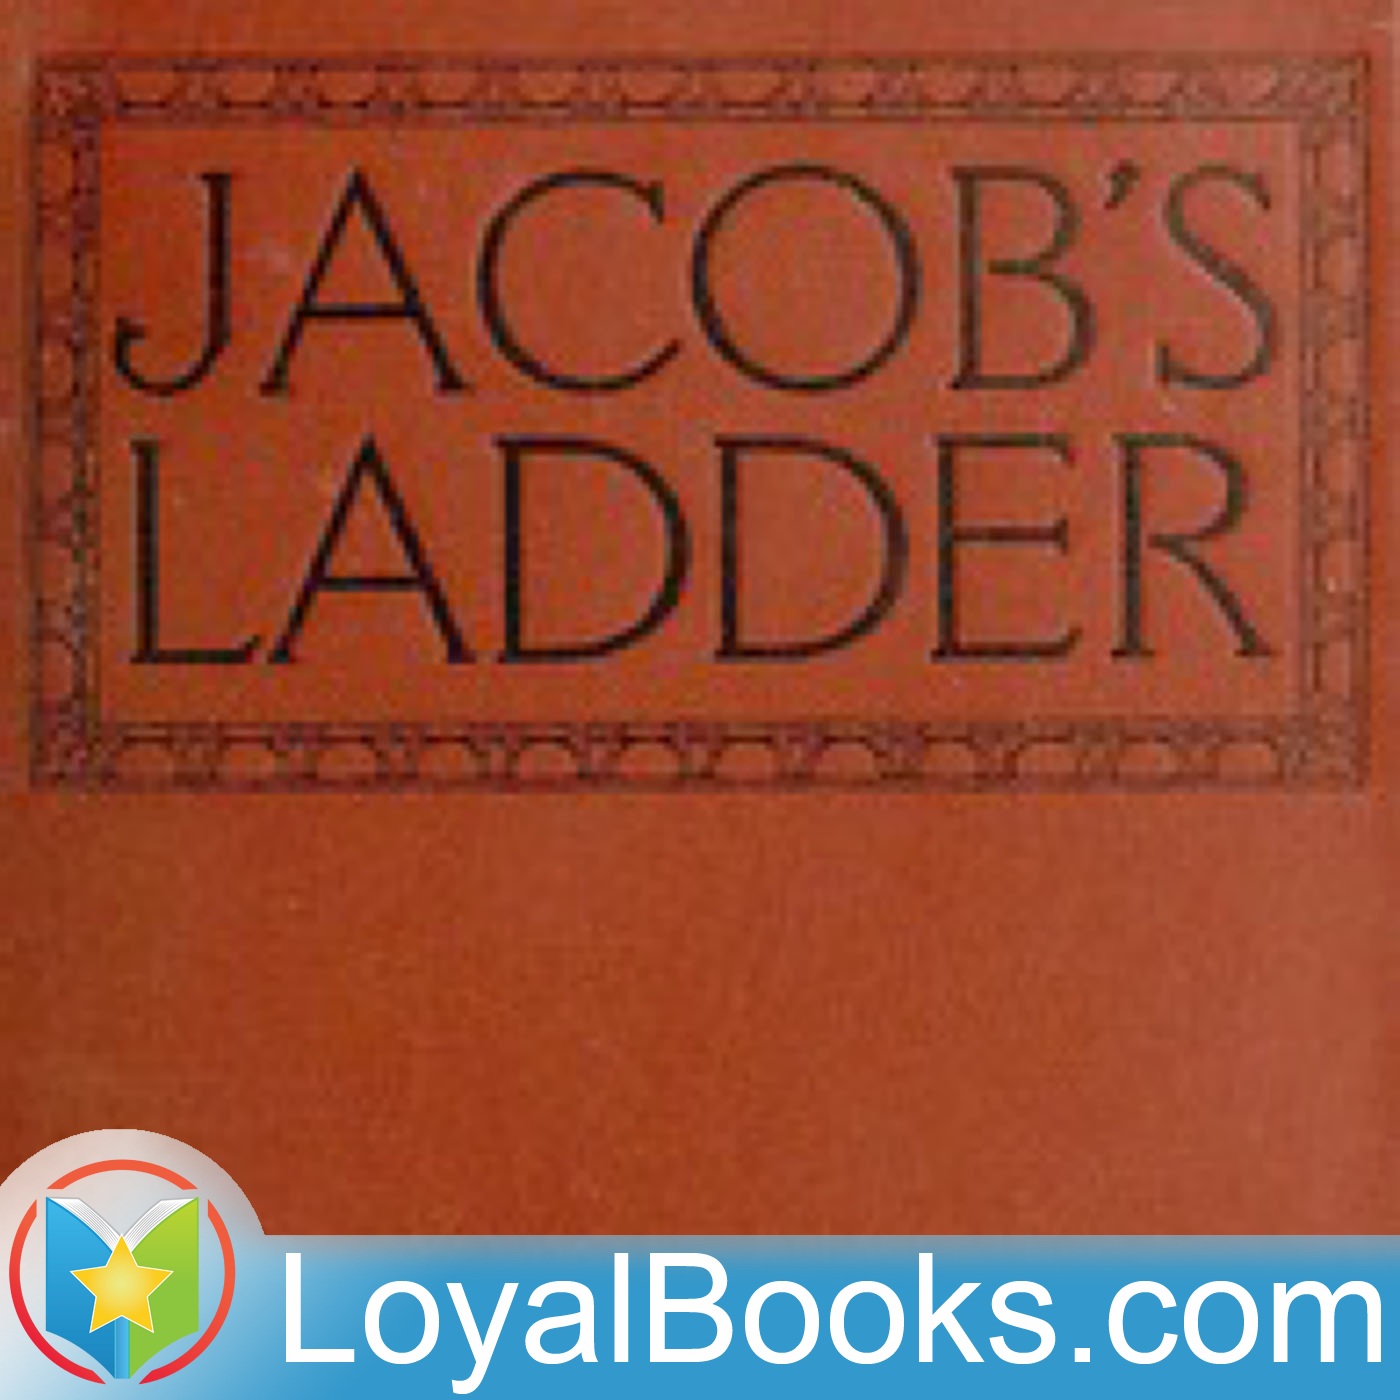 Jacob's Ladder by Edward Phillips Oppenheim